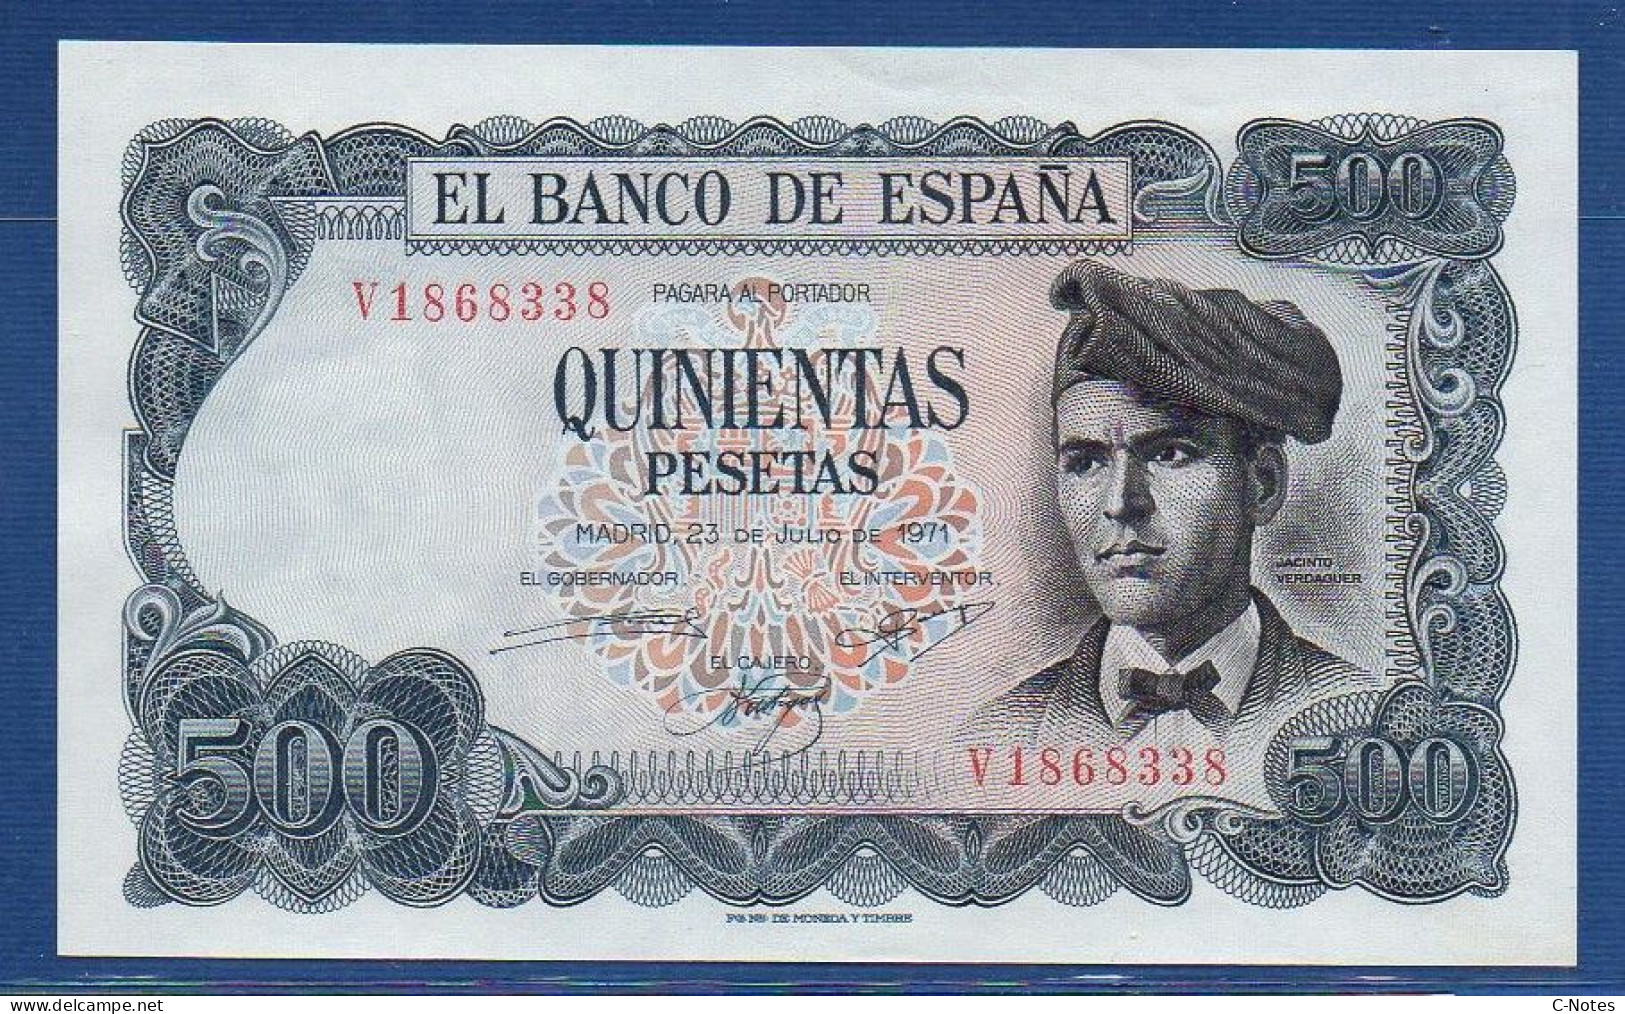 SPAIN - P.153 – 500 PESETAS 1971 AUNC-, S/n V1868338 - 500 Pesetas